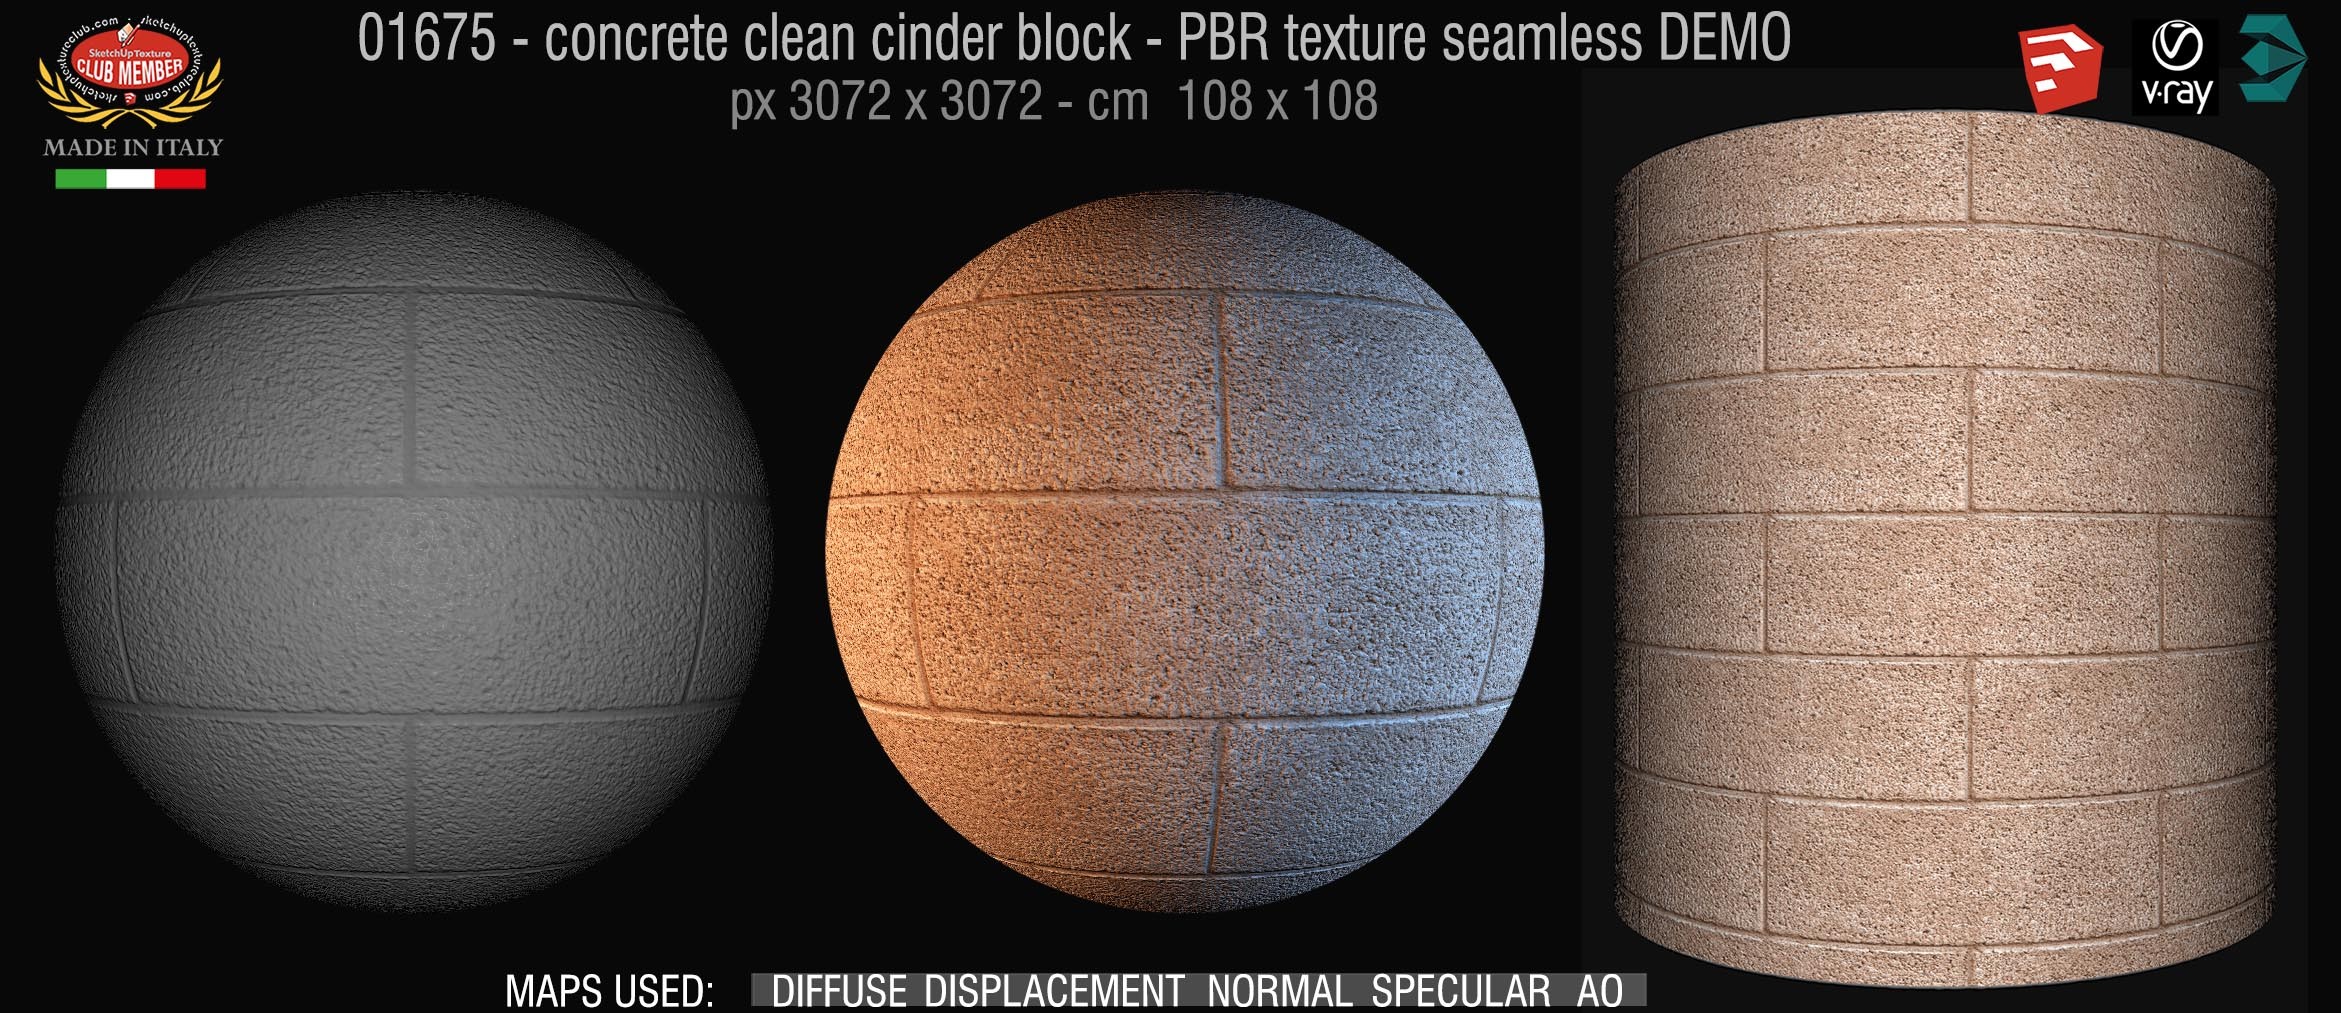 01675 concrete clean cinder block PBR texture seamless DEMO